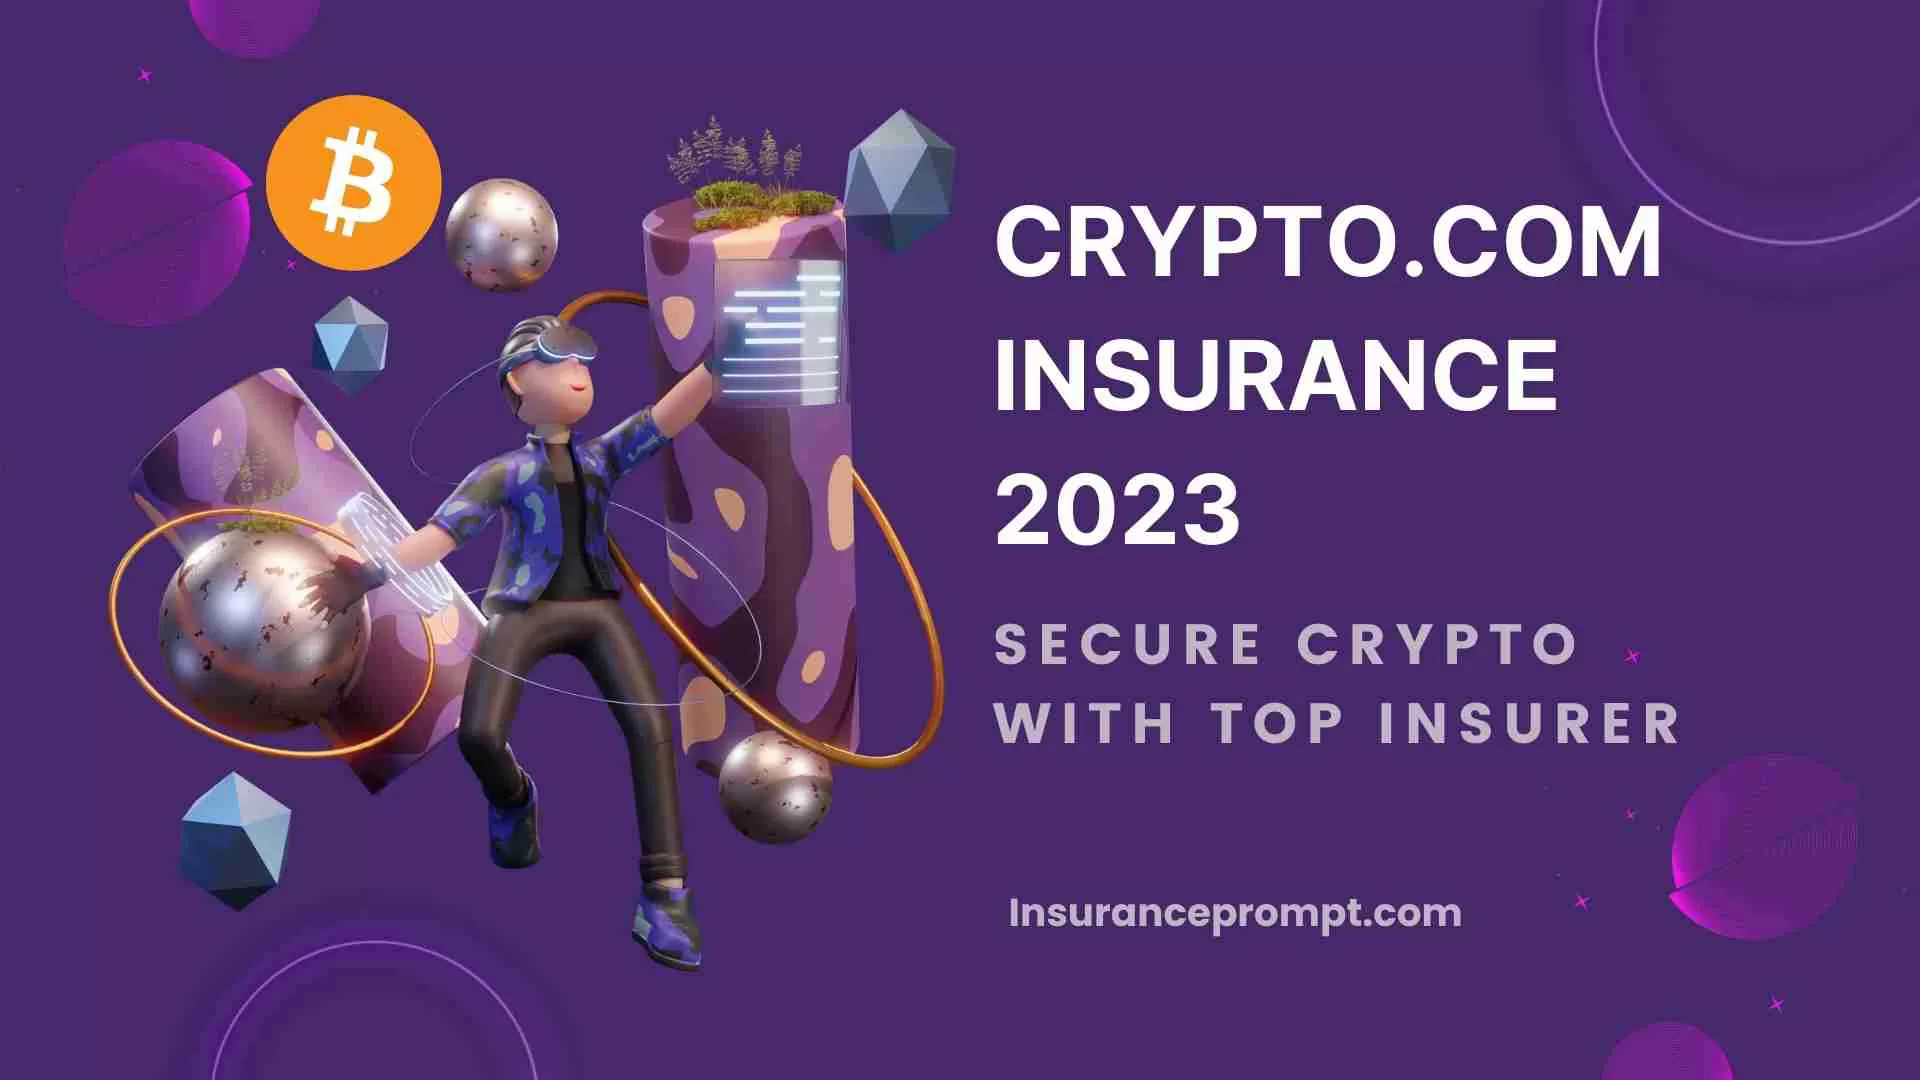 Crypto.com Insurance 2023 Secure Crypto With Top Insurer